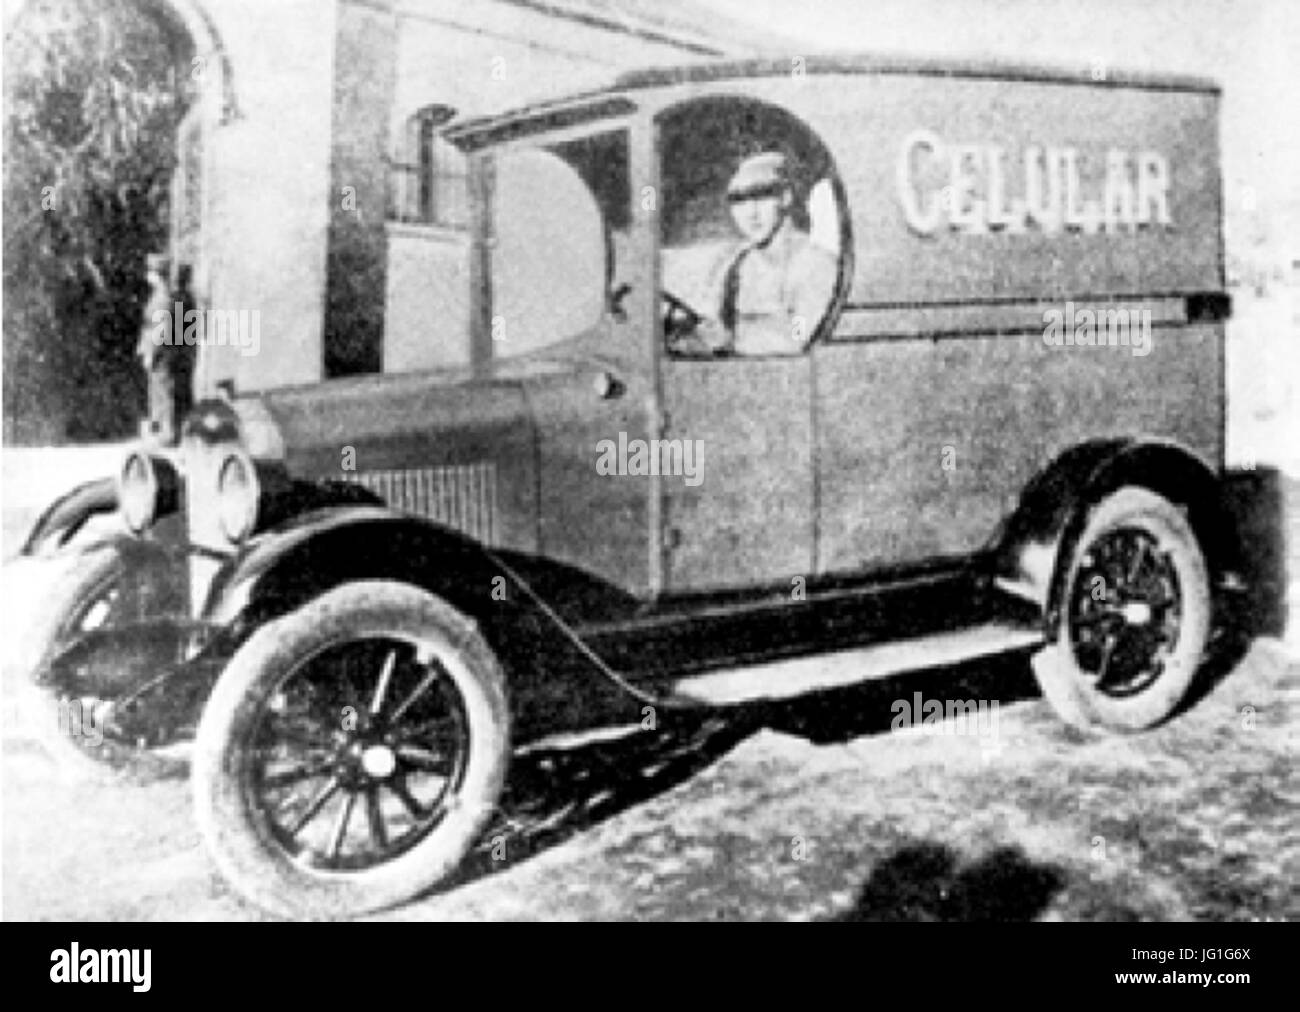 Gendarmeria de Chile - Carro celular - Siglo XX años 20. Stock Photo